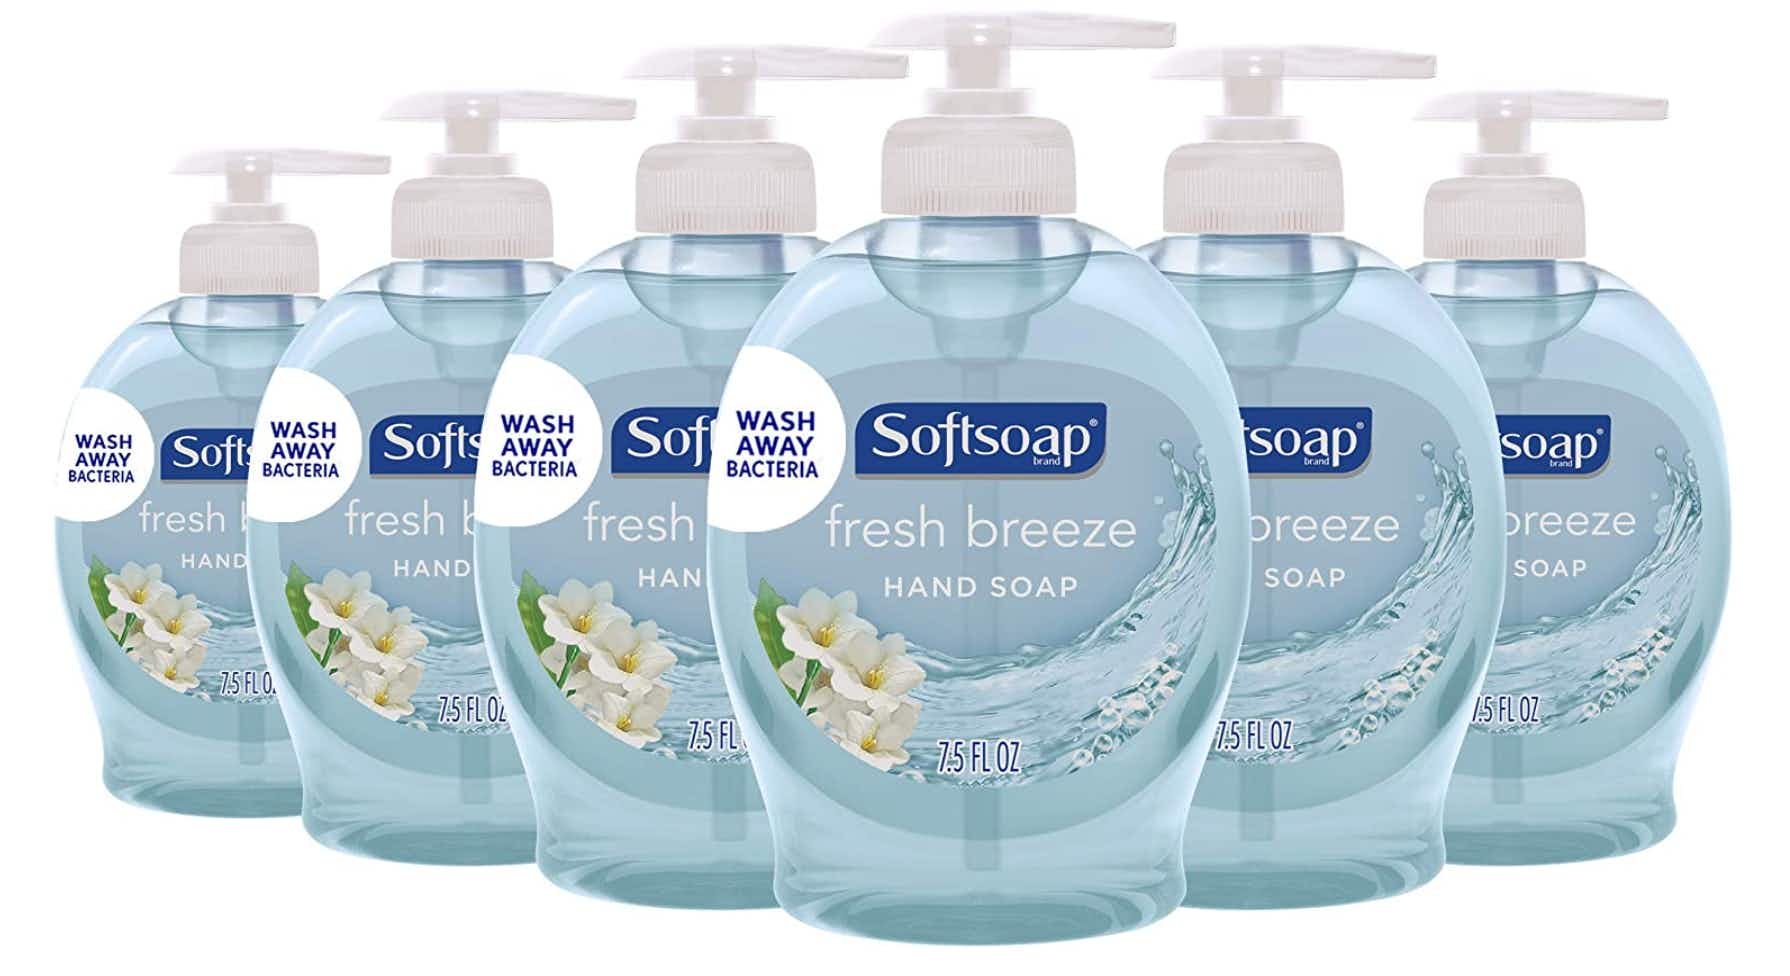 Softsoap Liquid Hand Soap Fresh Breeze